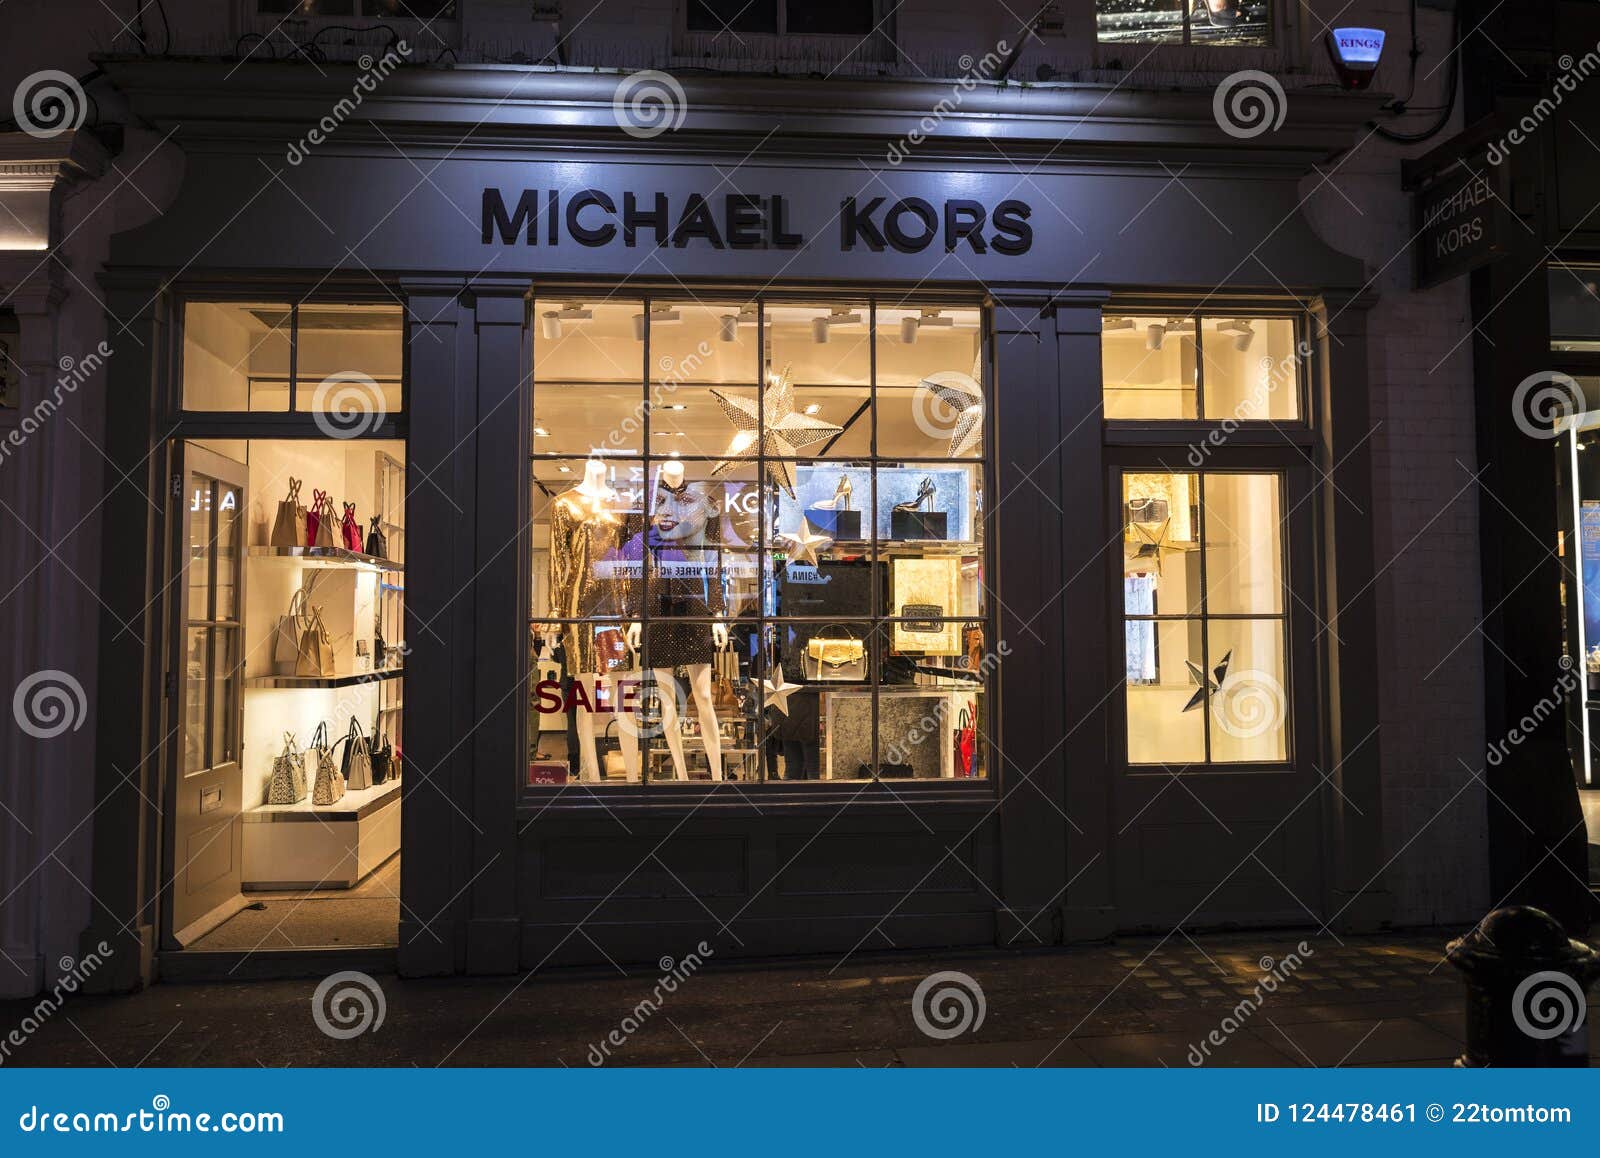 Michael Kors Shop in London, England, Kingdom Editorial Photo Image of elegance, design: 124478461